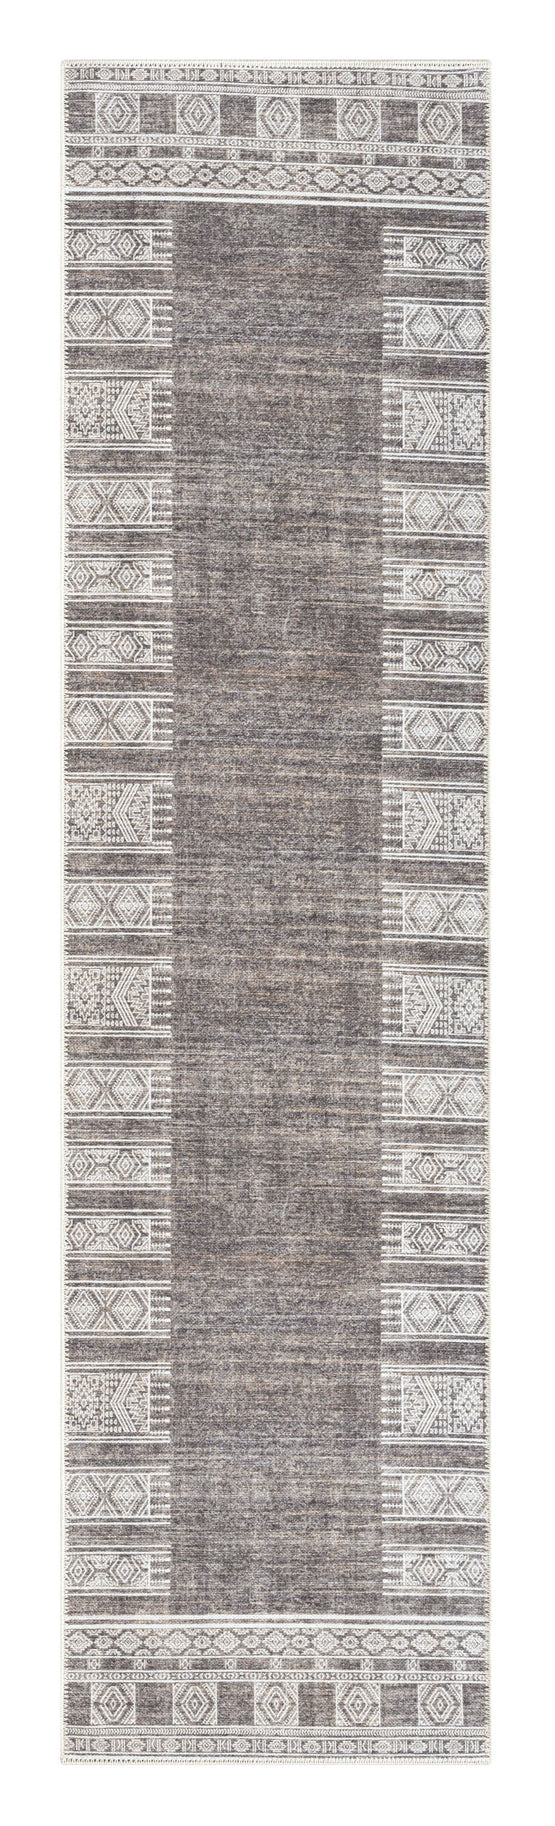 Raia 200cm x 80cm Tribal Distressed Washable Runner Rug - Charcoal & Grey